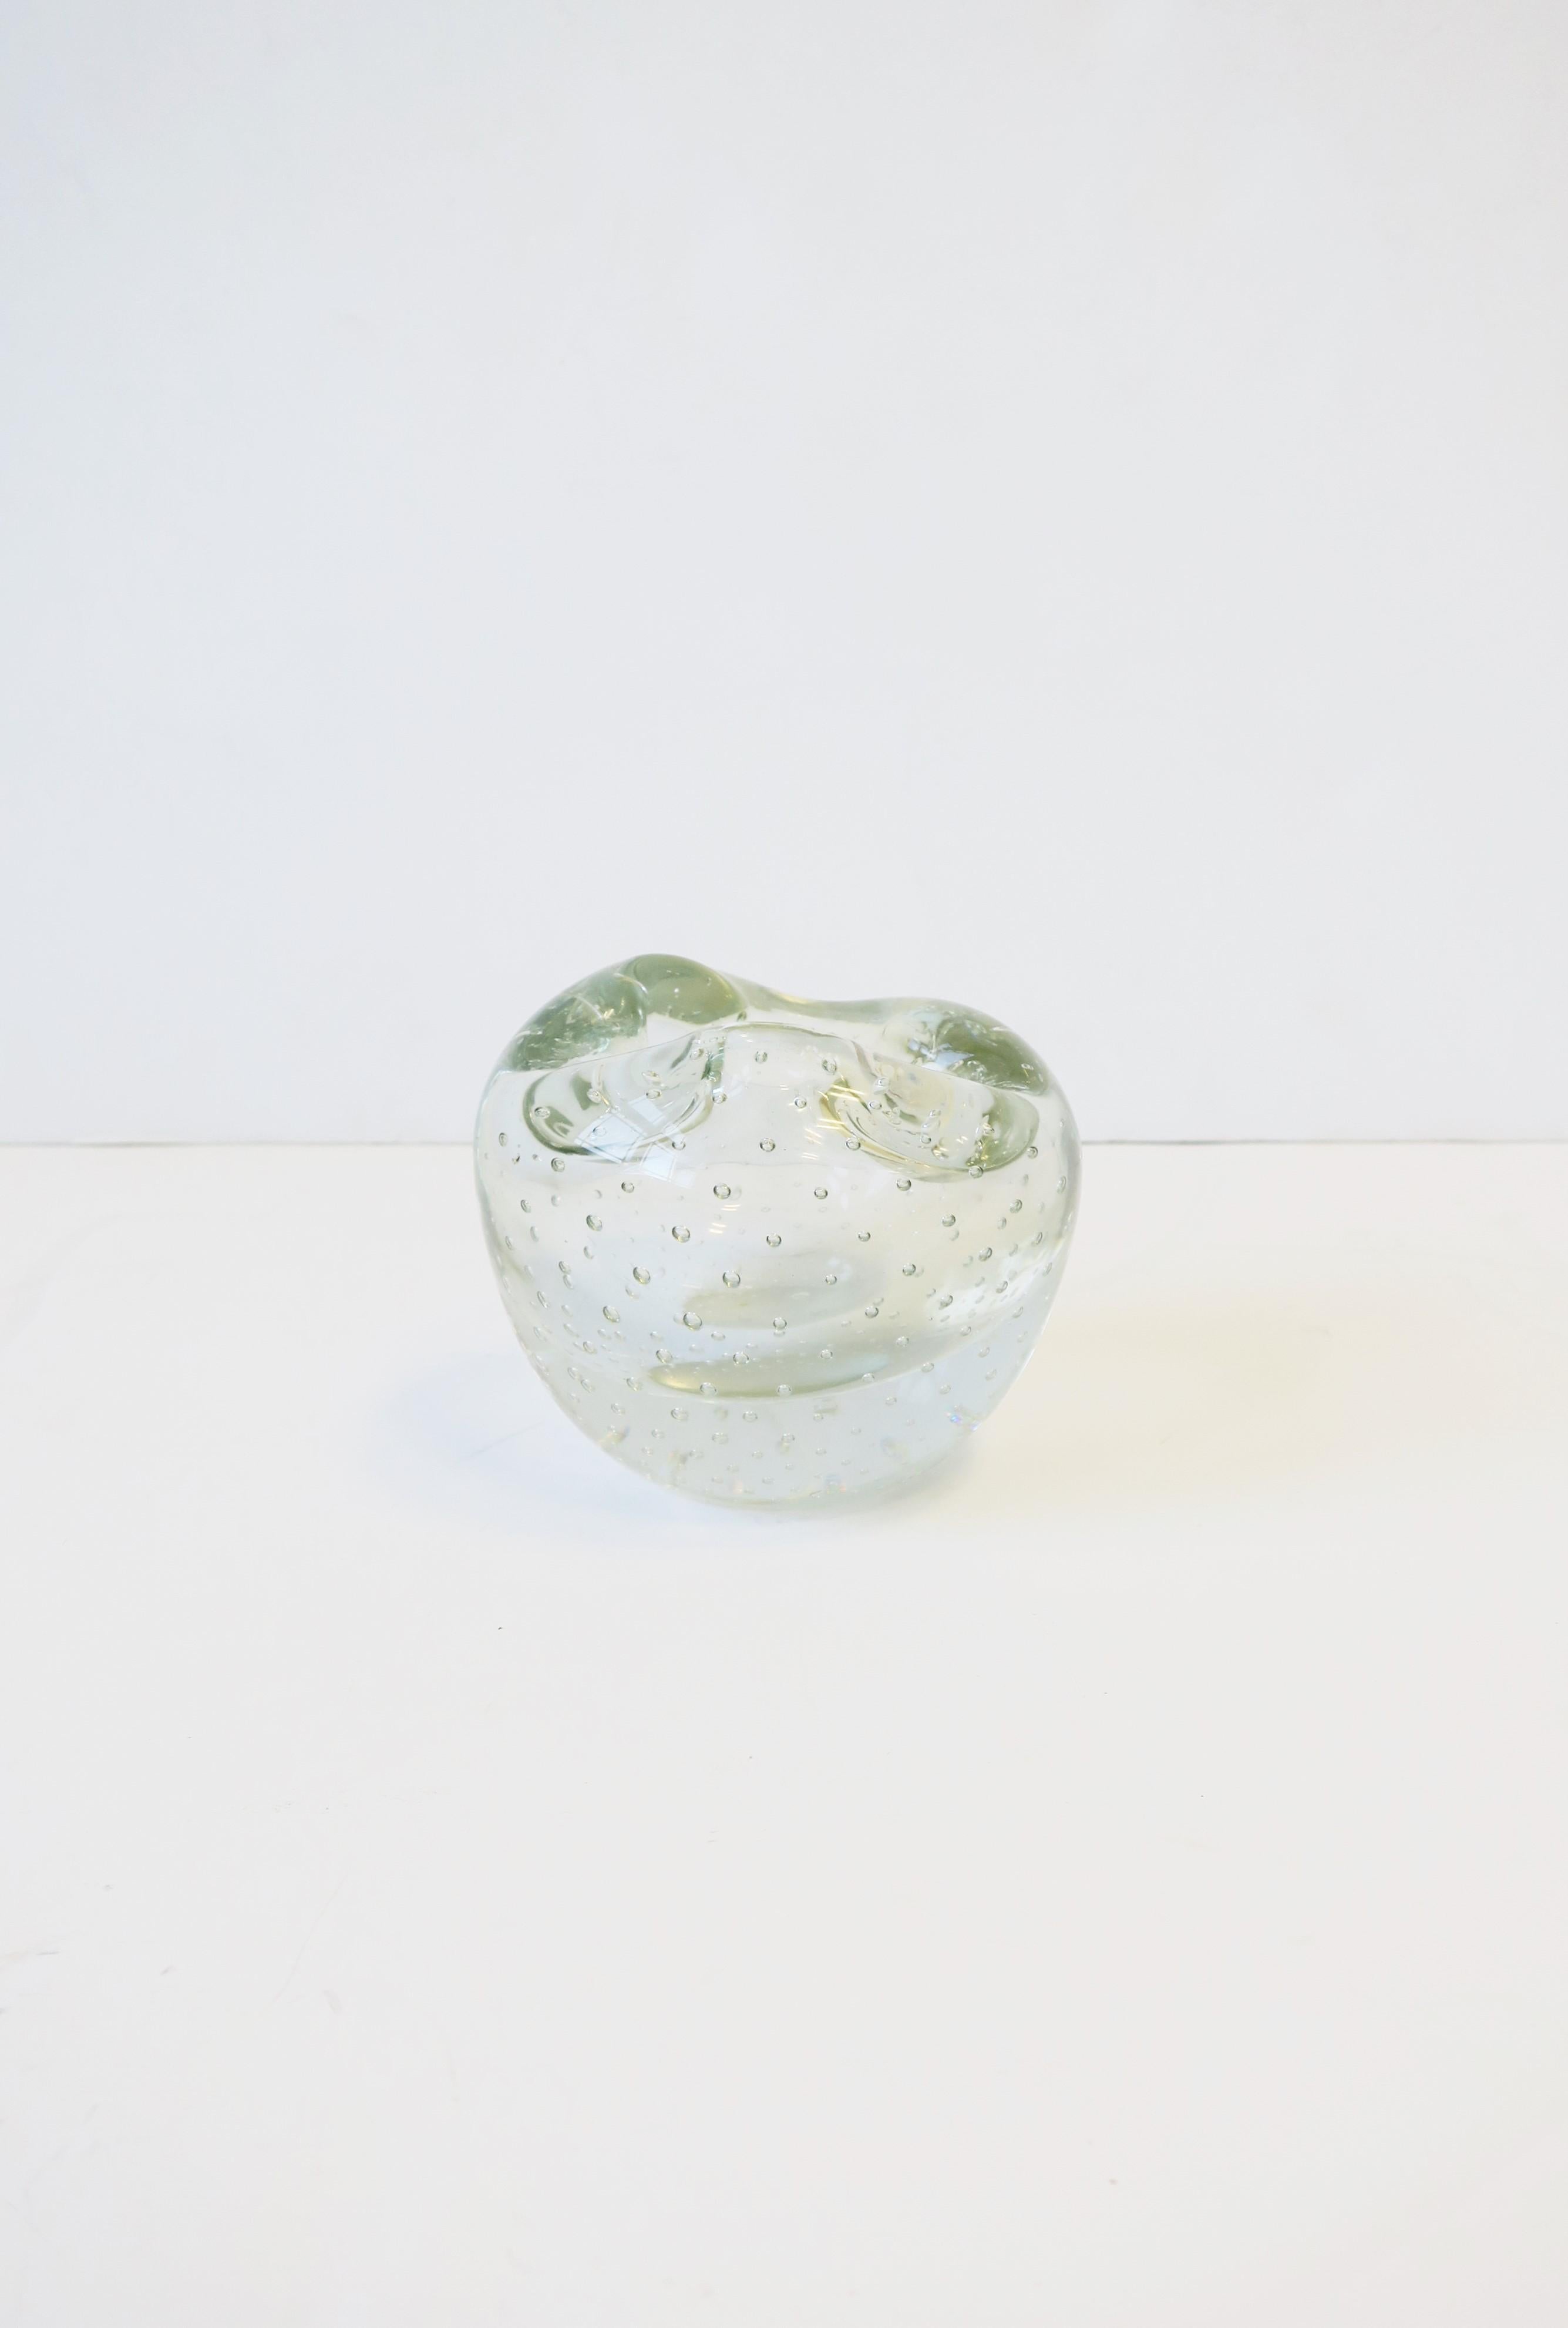 Organic Modern Italian Murano Clear Art Glass Vase or Decorative Object